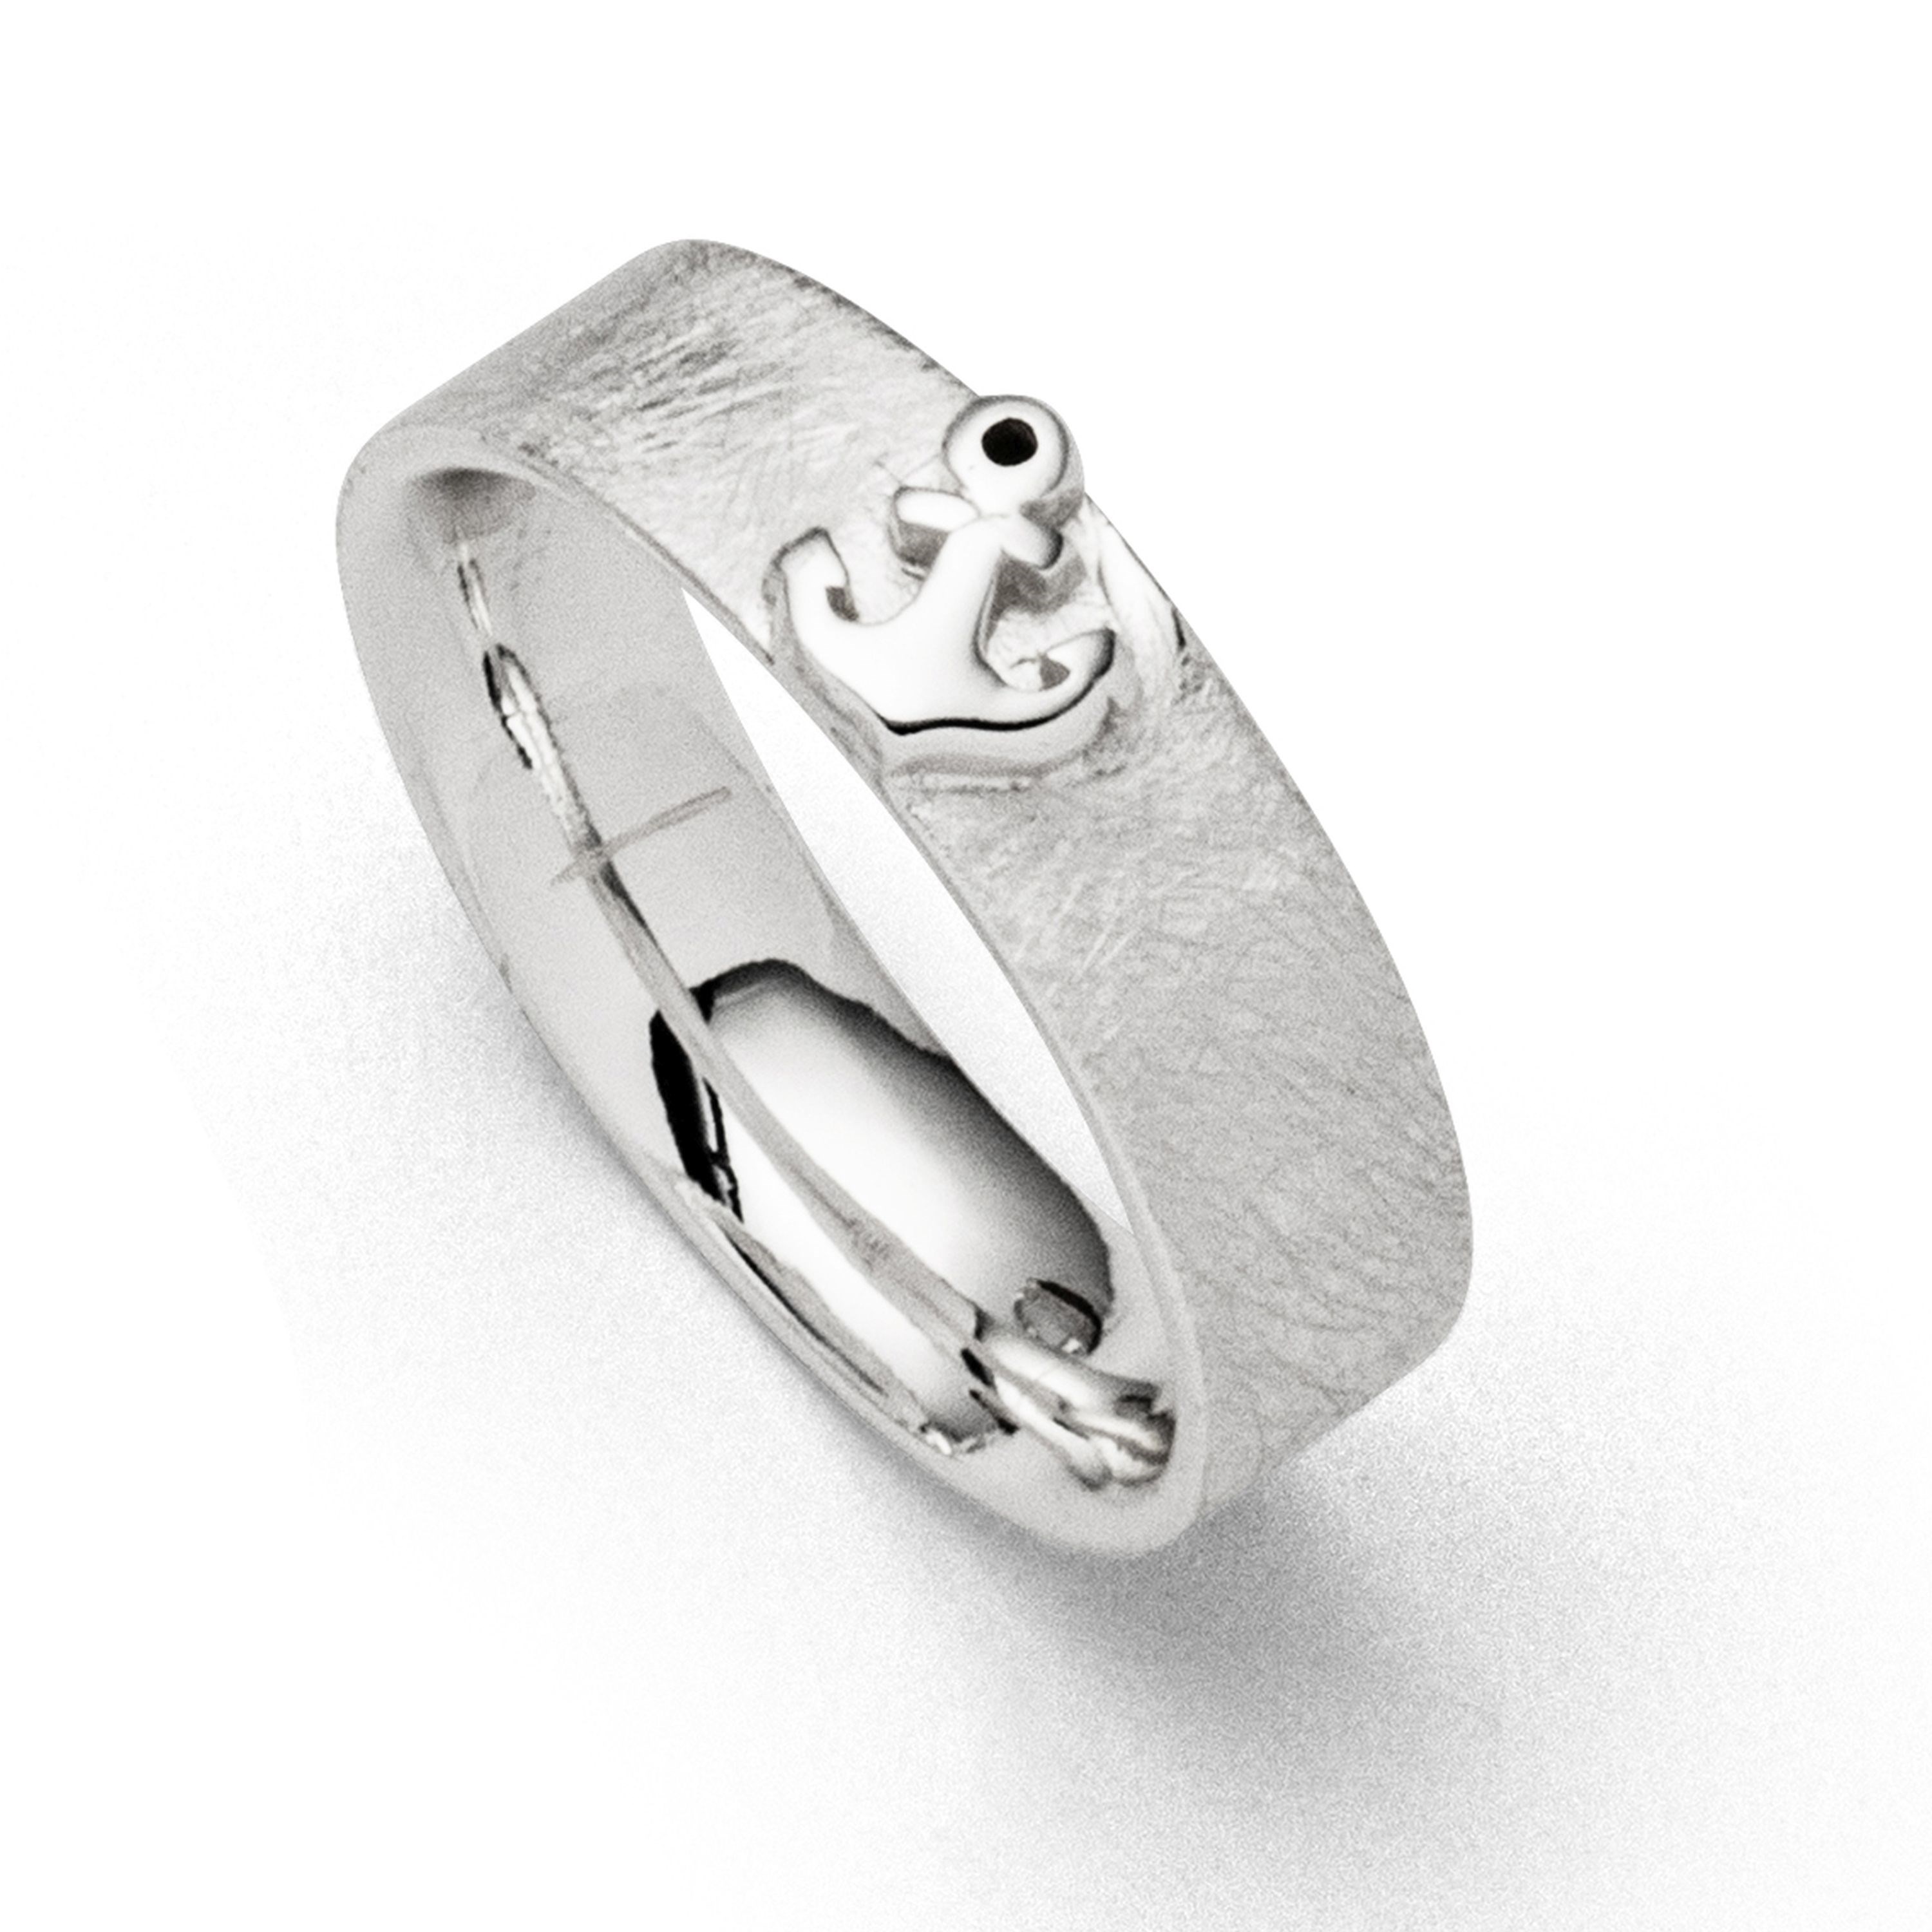 DUR - Ring Anker Ringgröße: 52 (16,6)